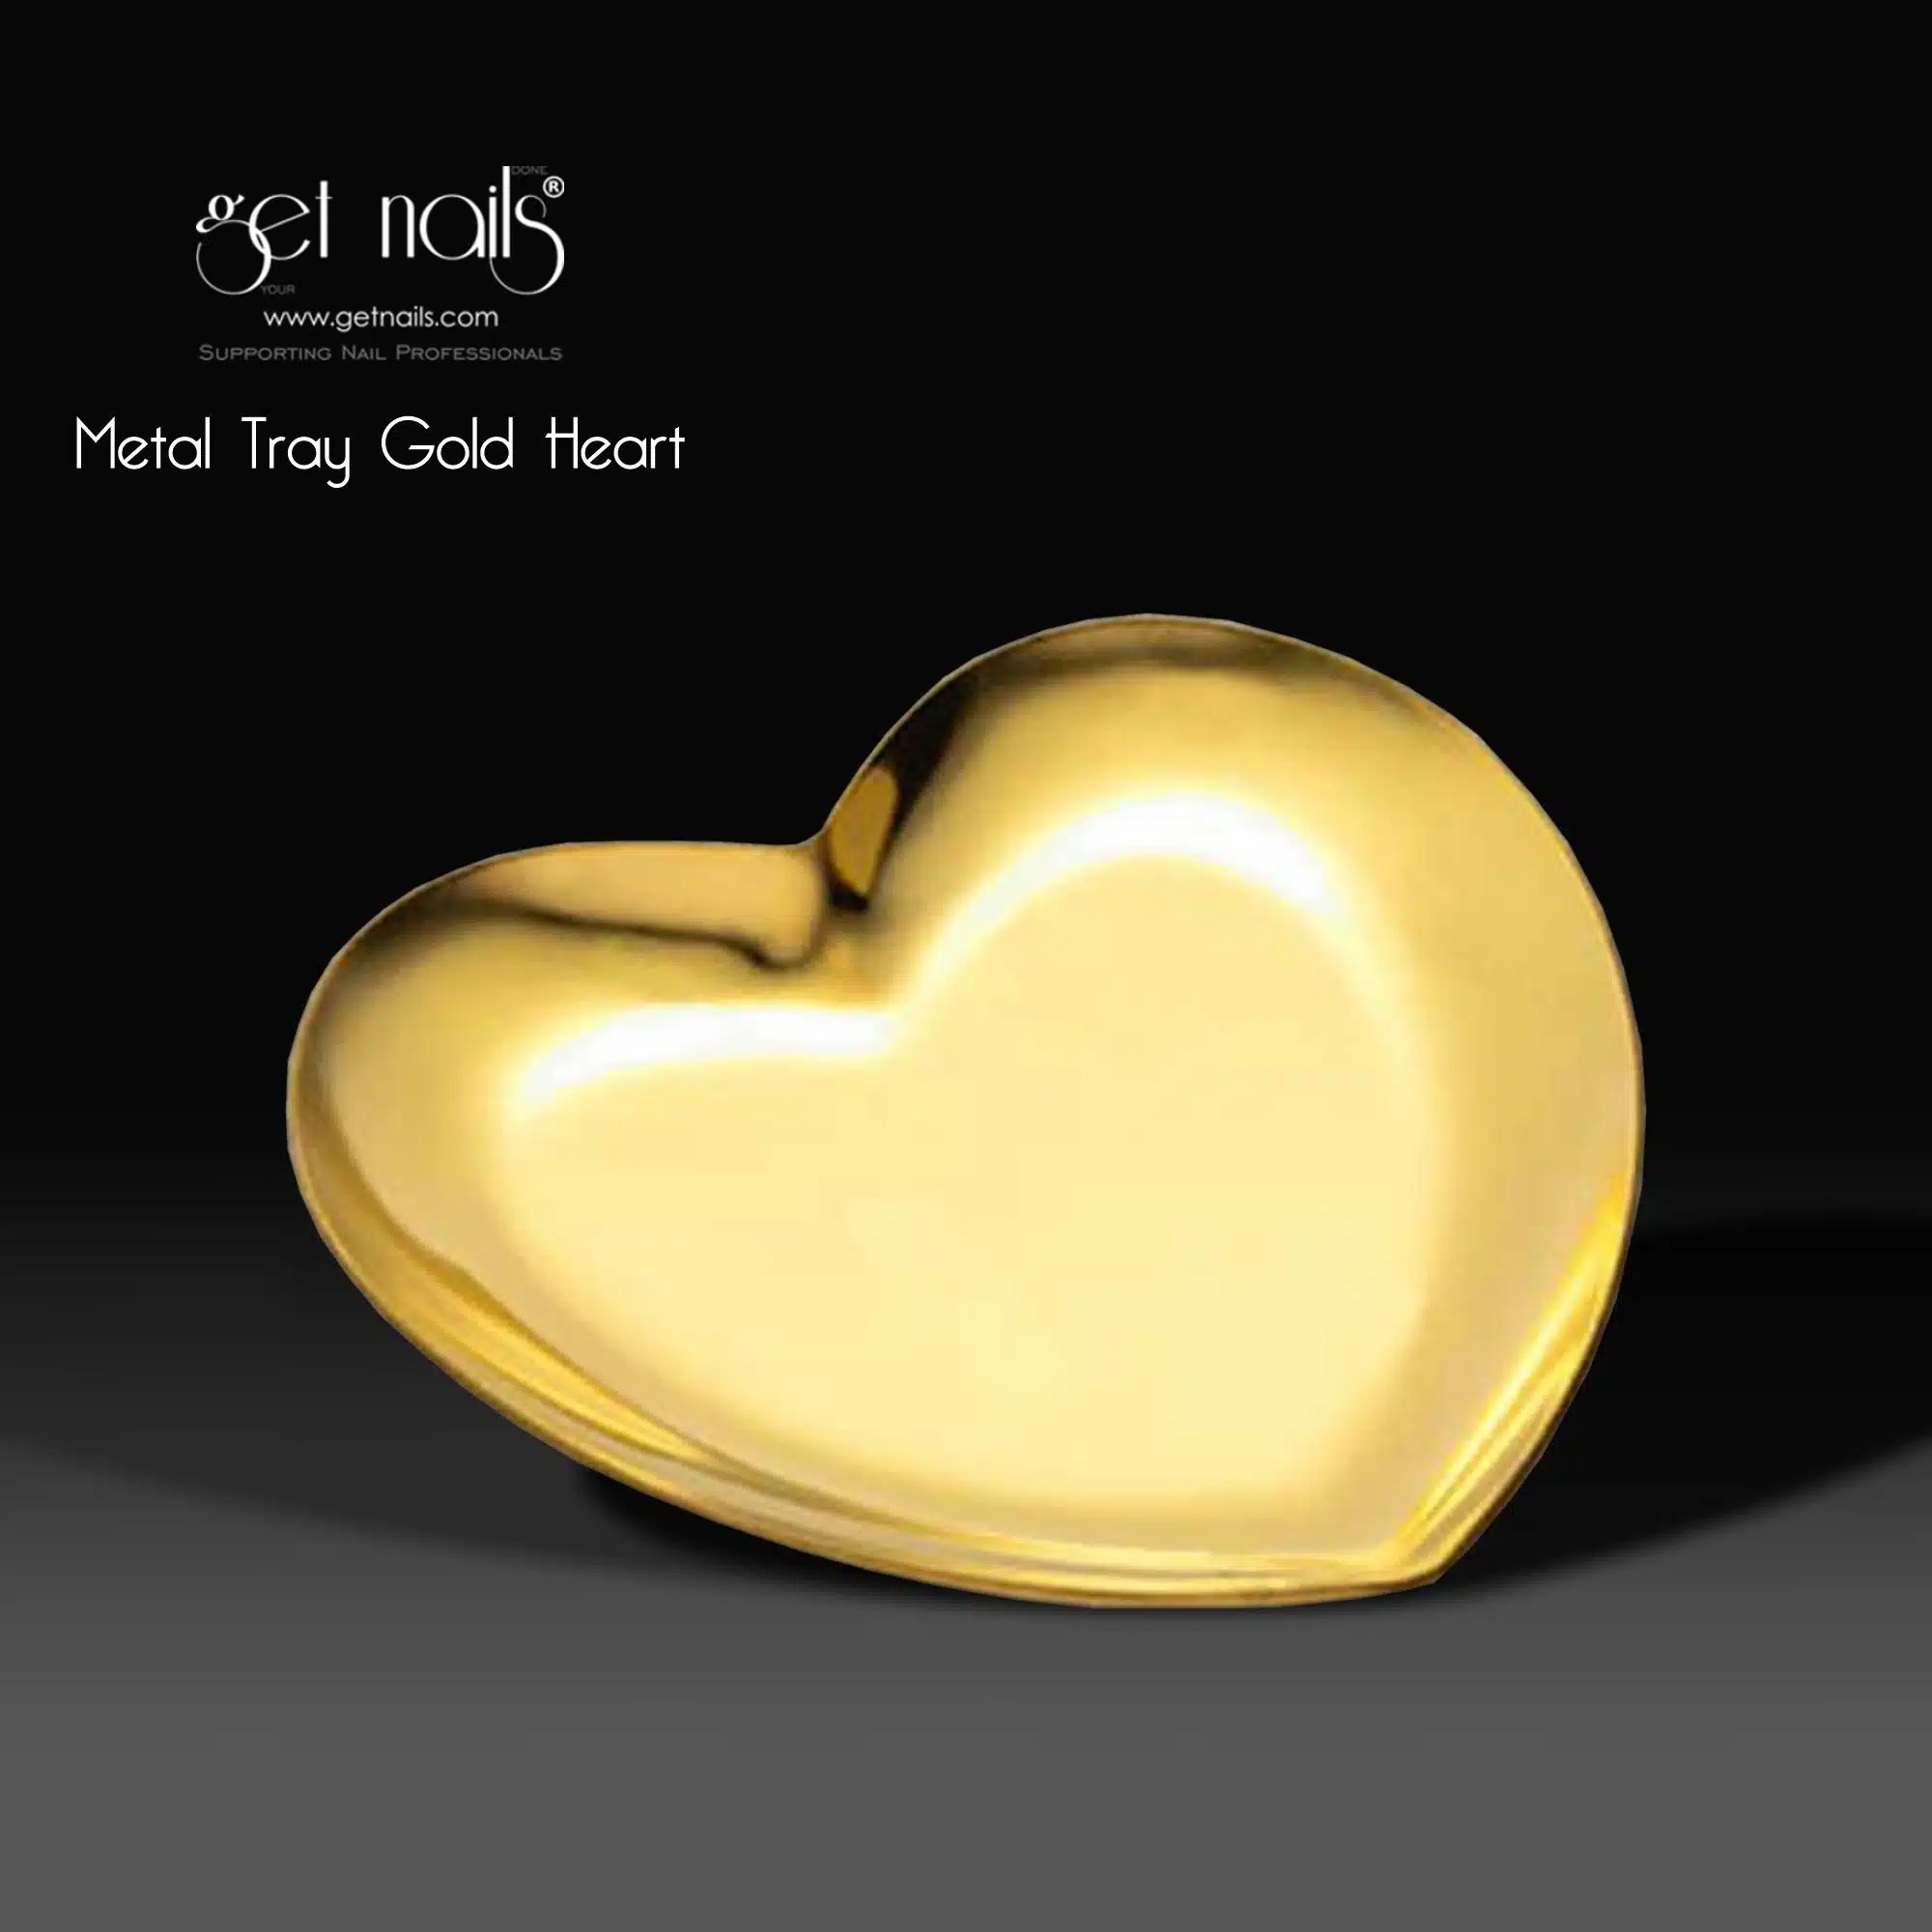 Get Nails Austria - Metal Tray Heart Gold